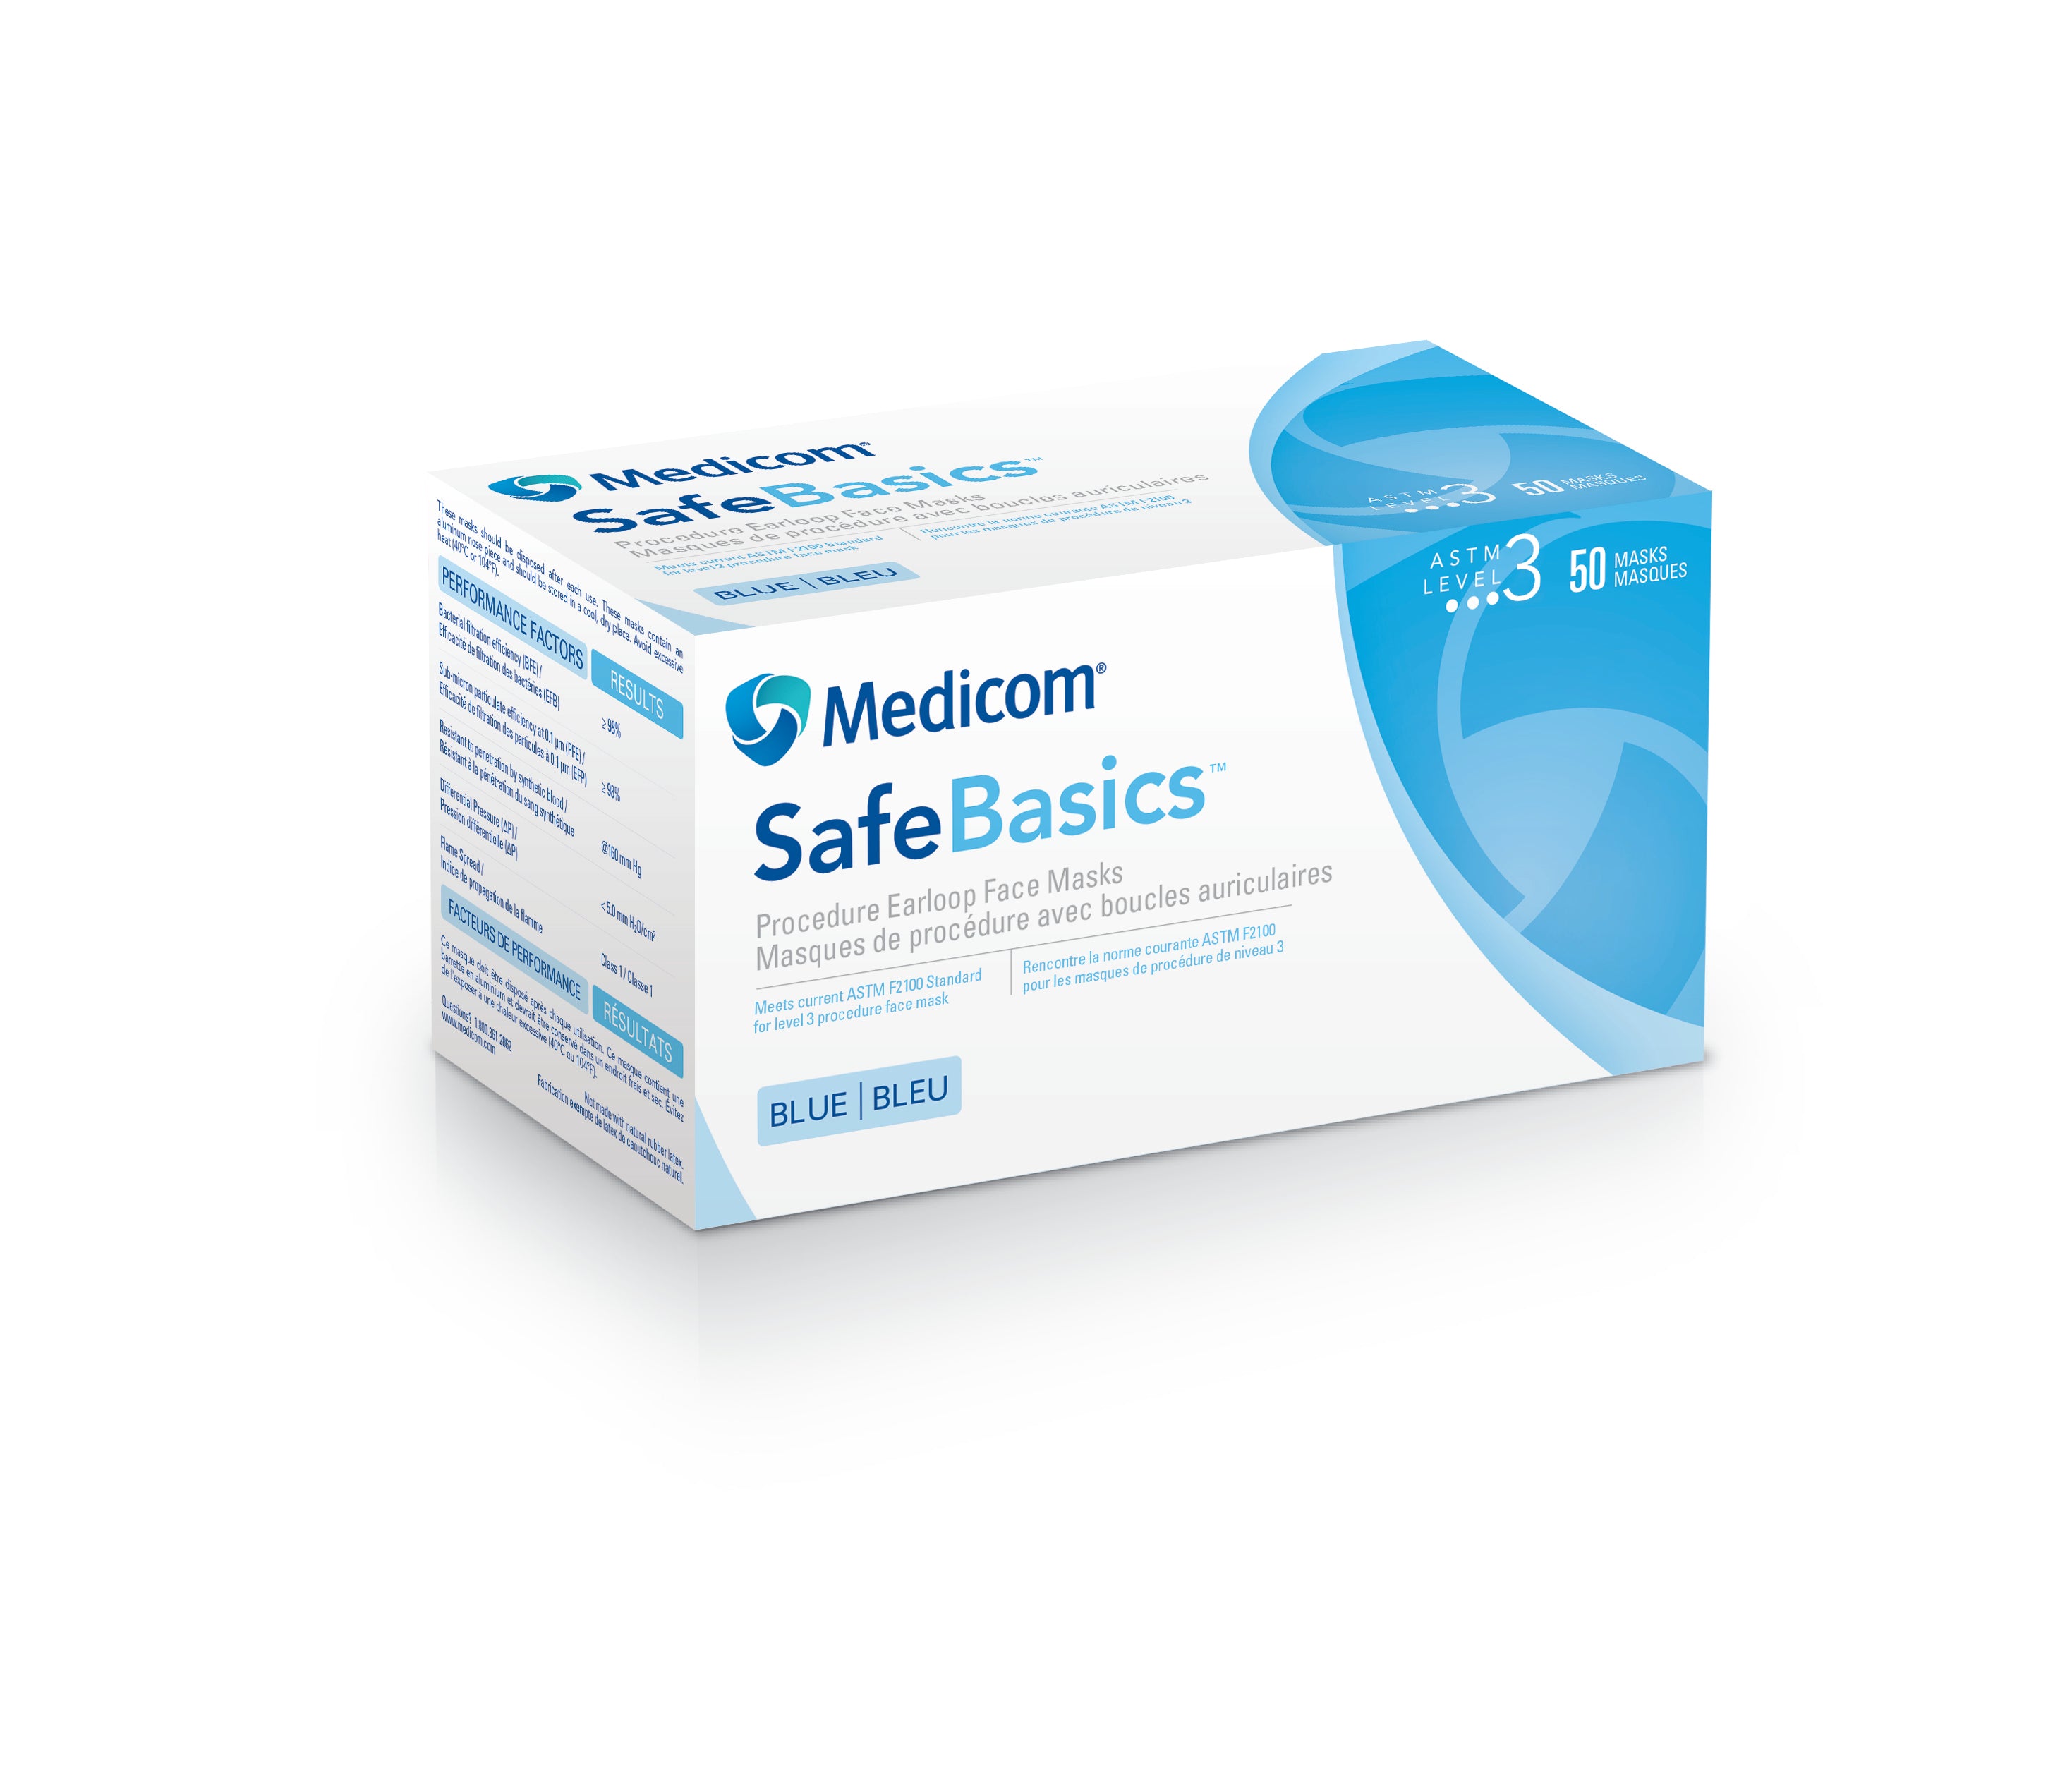 Buy blue Medicom SafeBasics Level 3 ASTM Earloop Face Masks